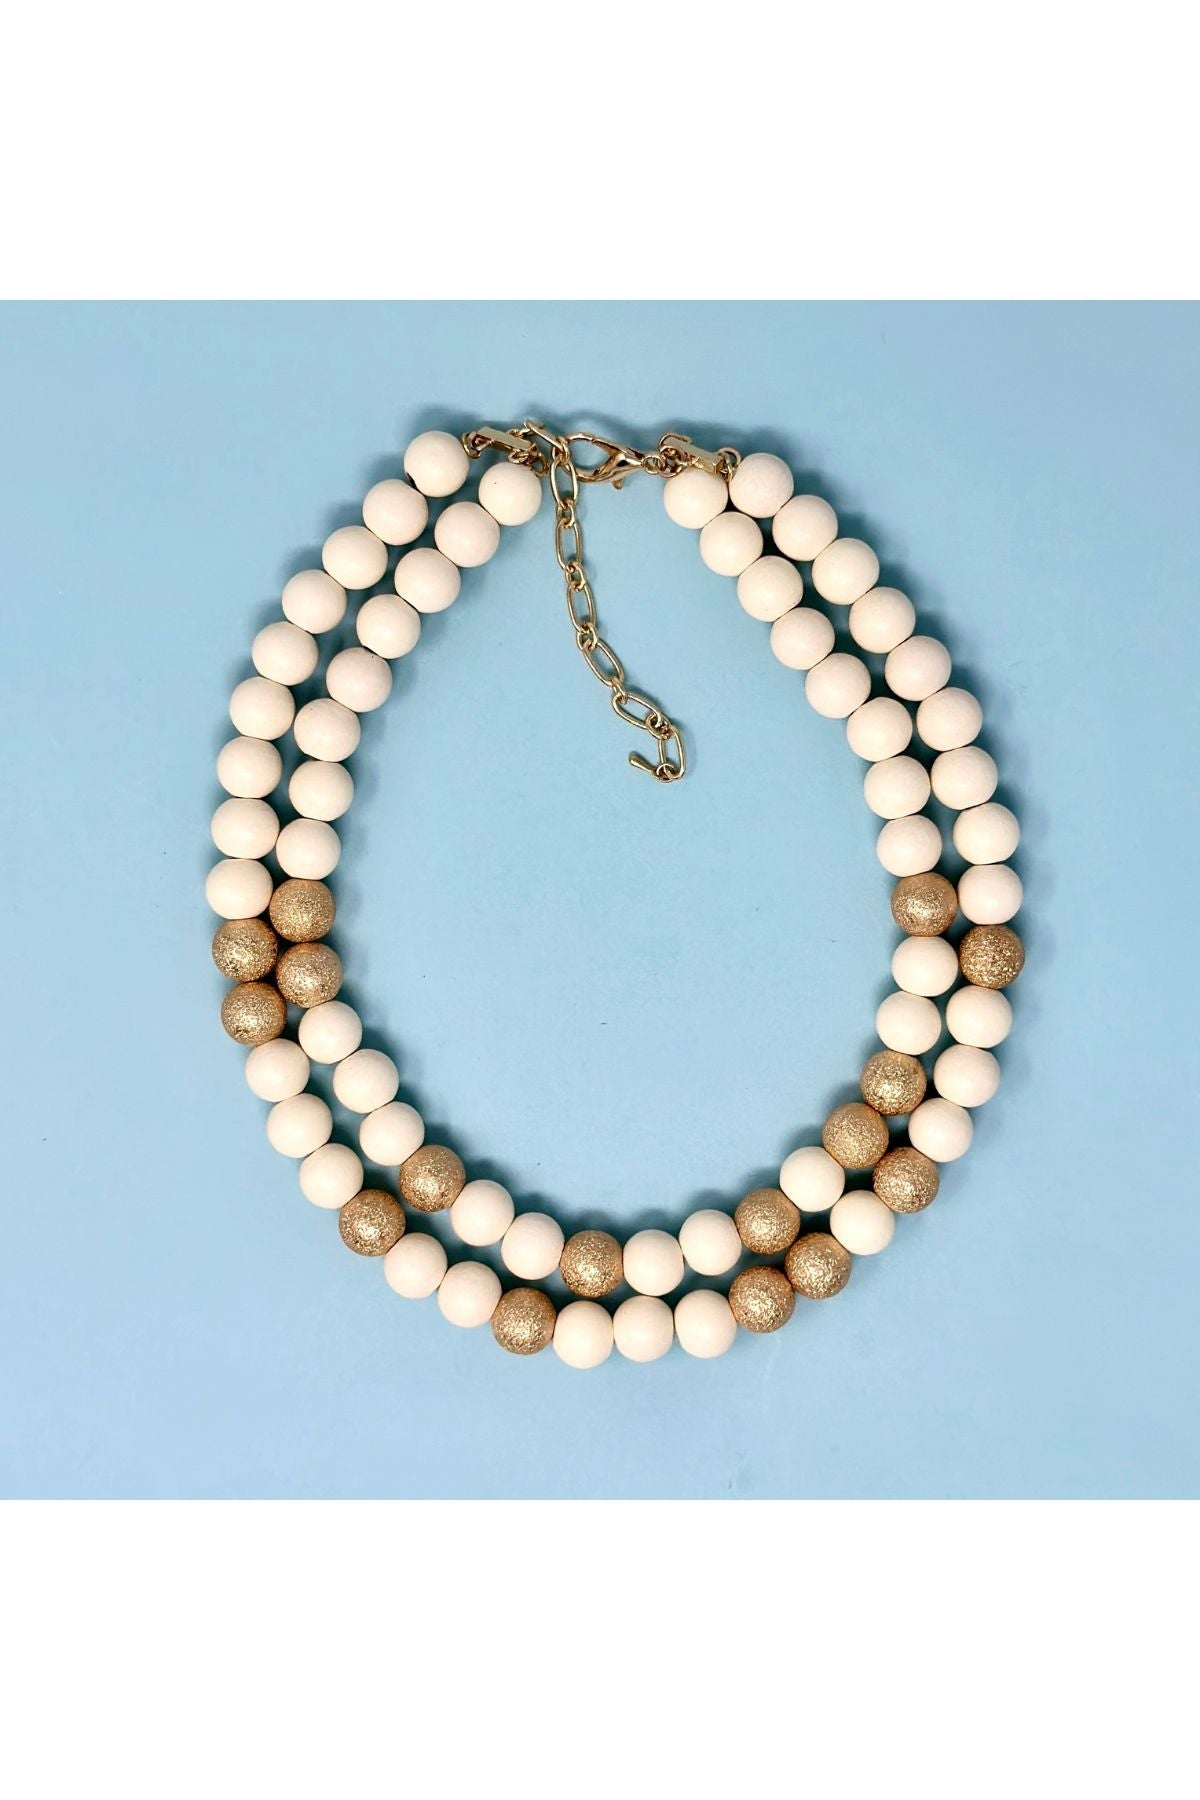 Ivory beaded necklace